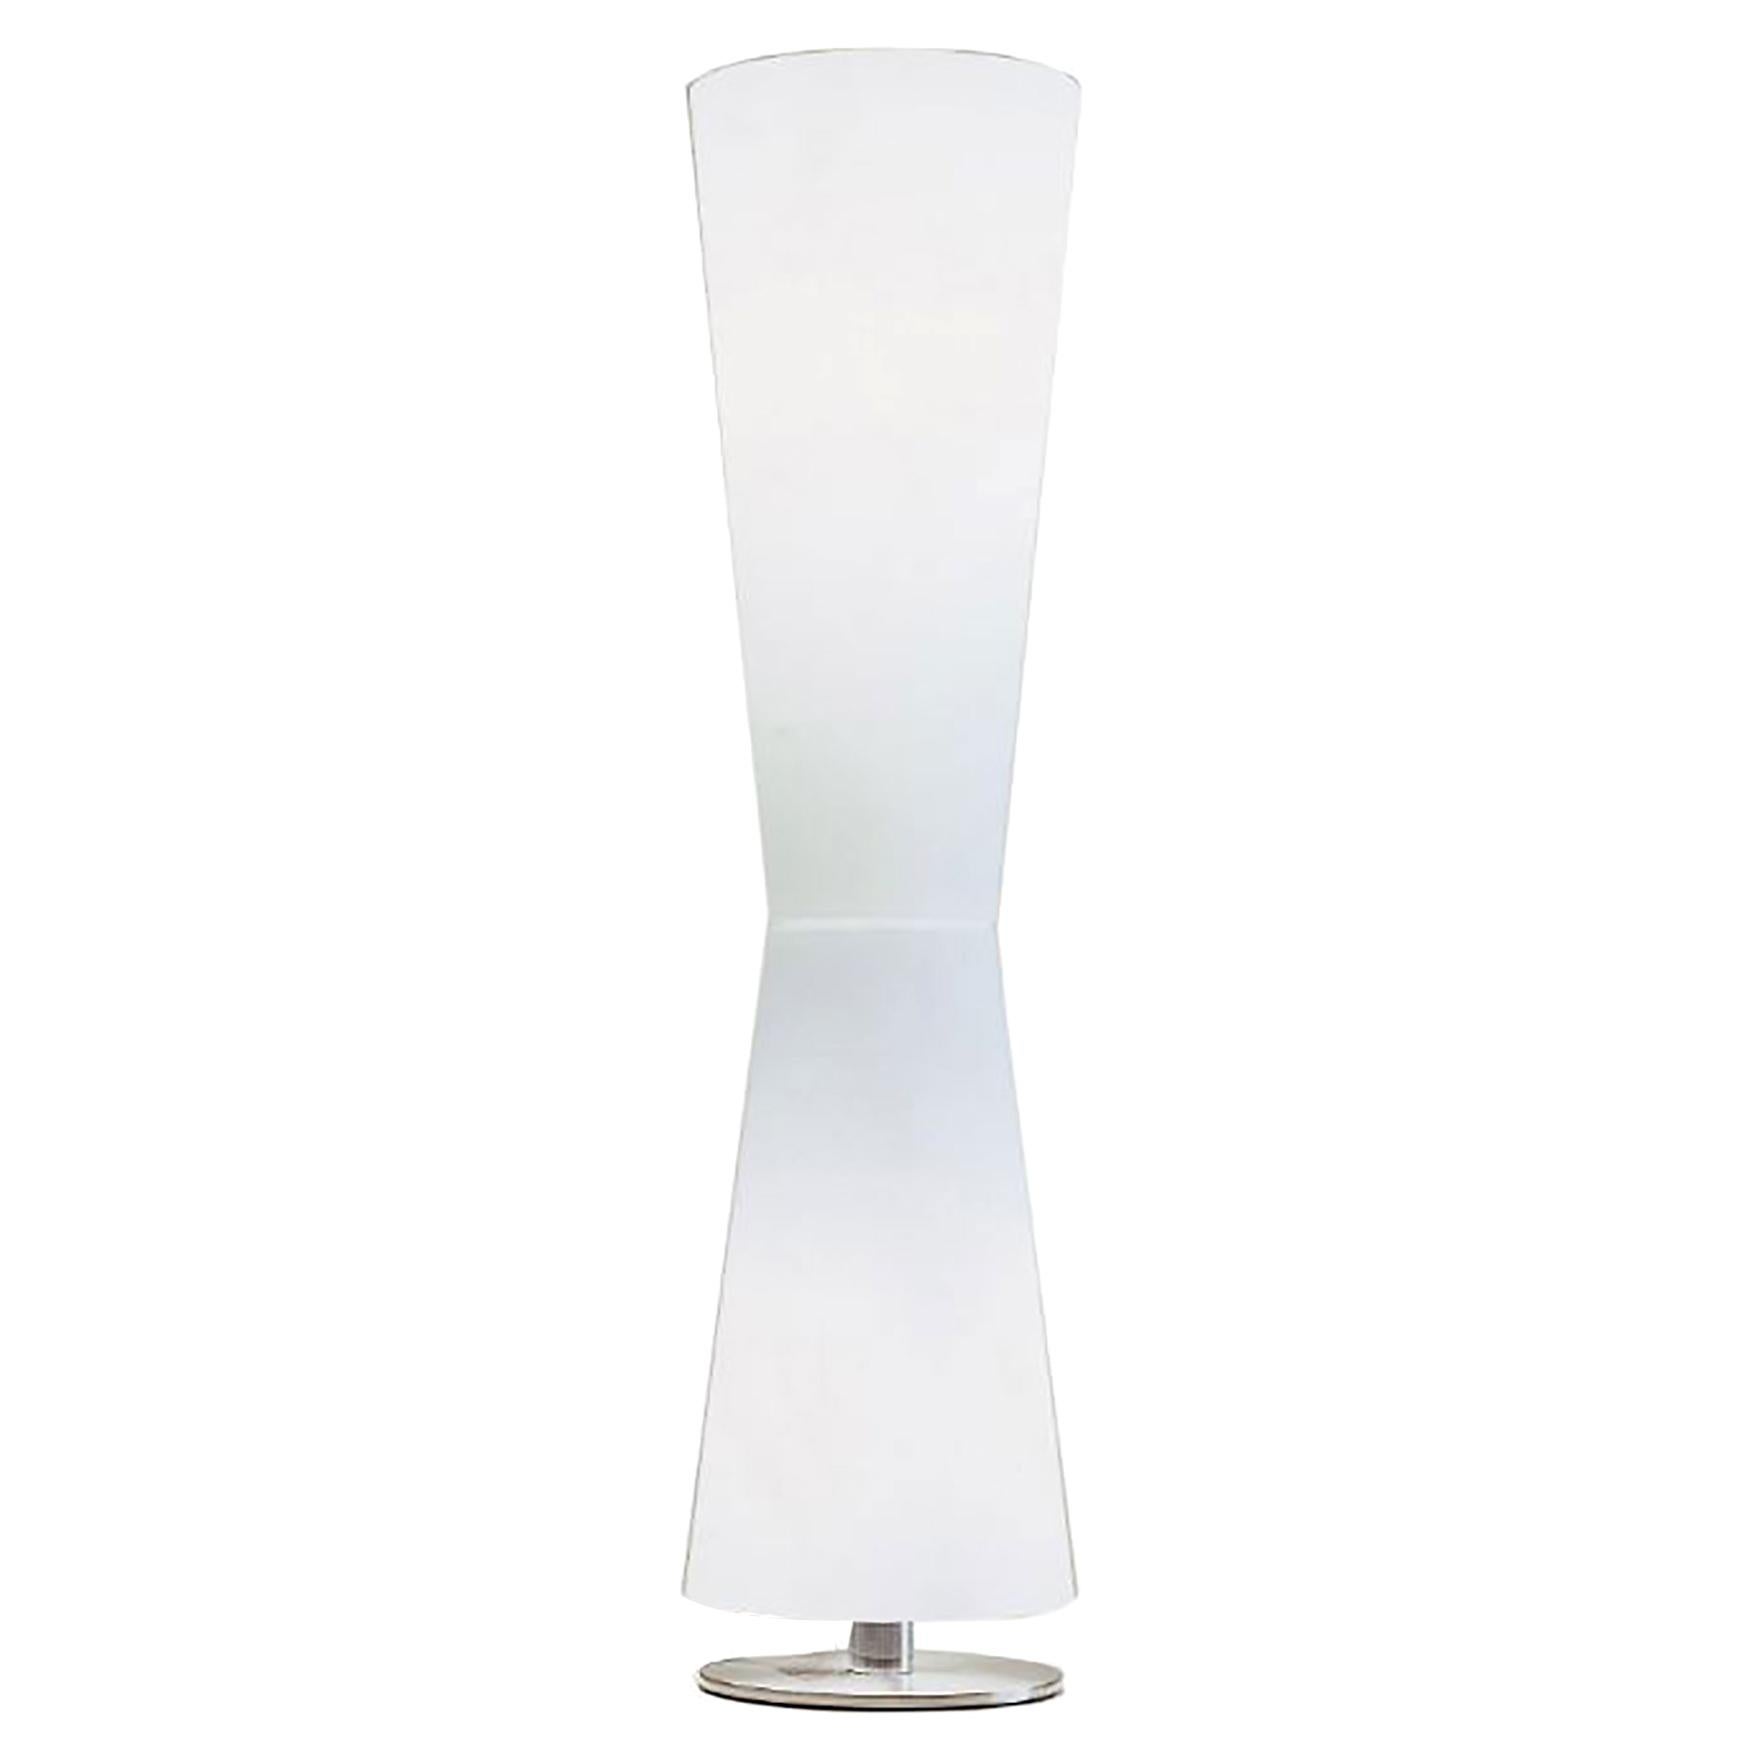 Lu-Lu Table Lamp by Stefano Casciani for Oluce